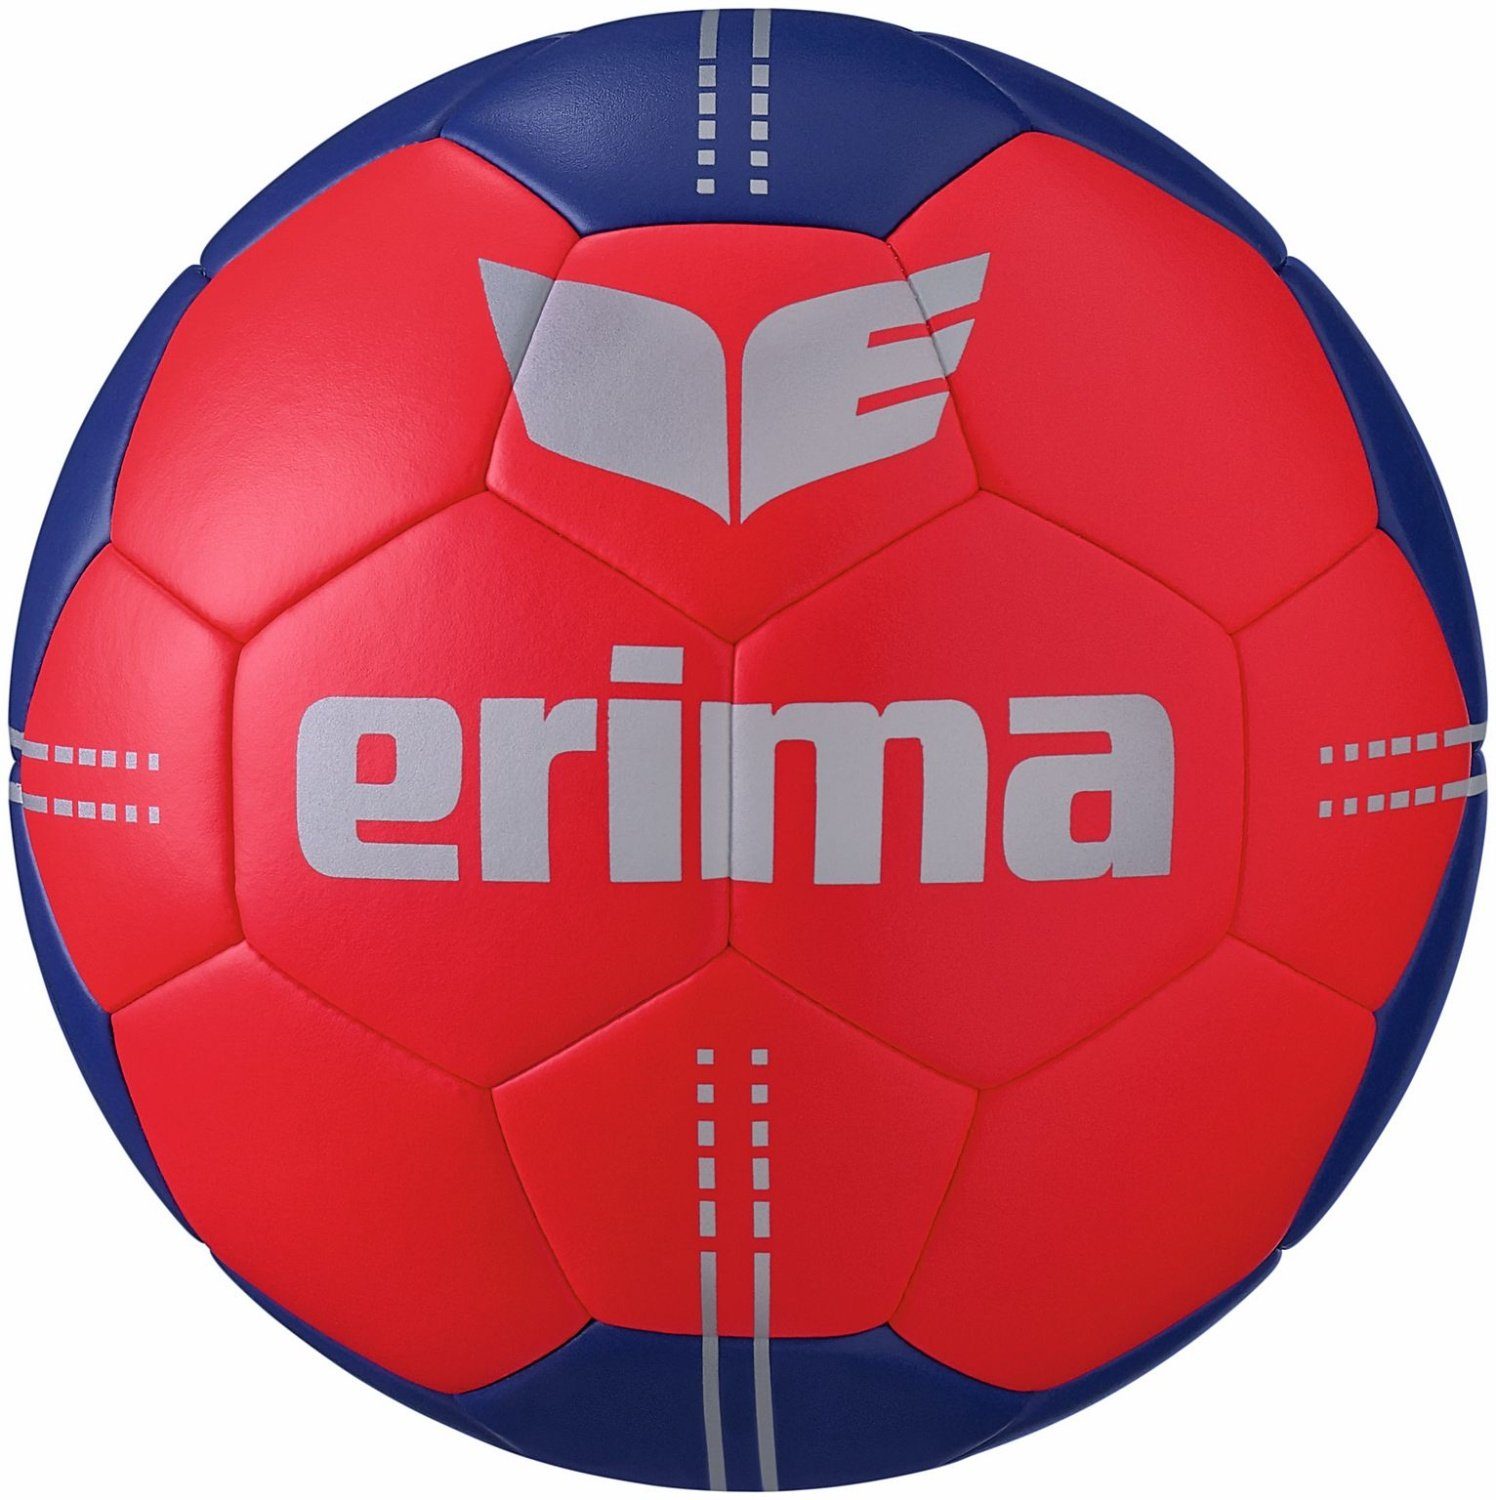 Handball Erima